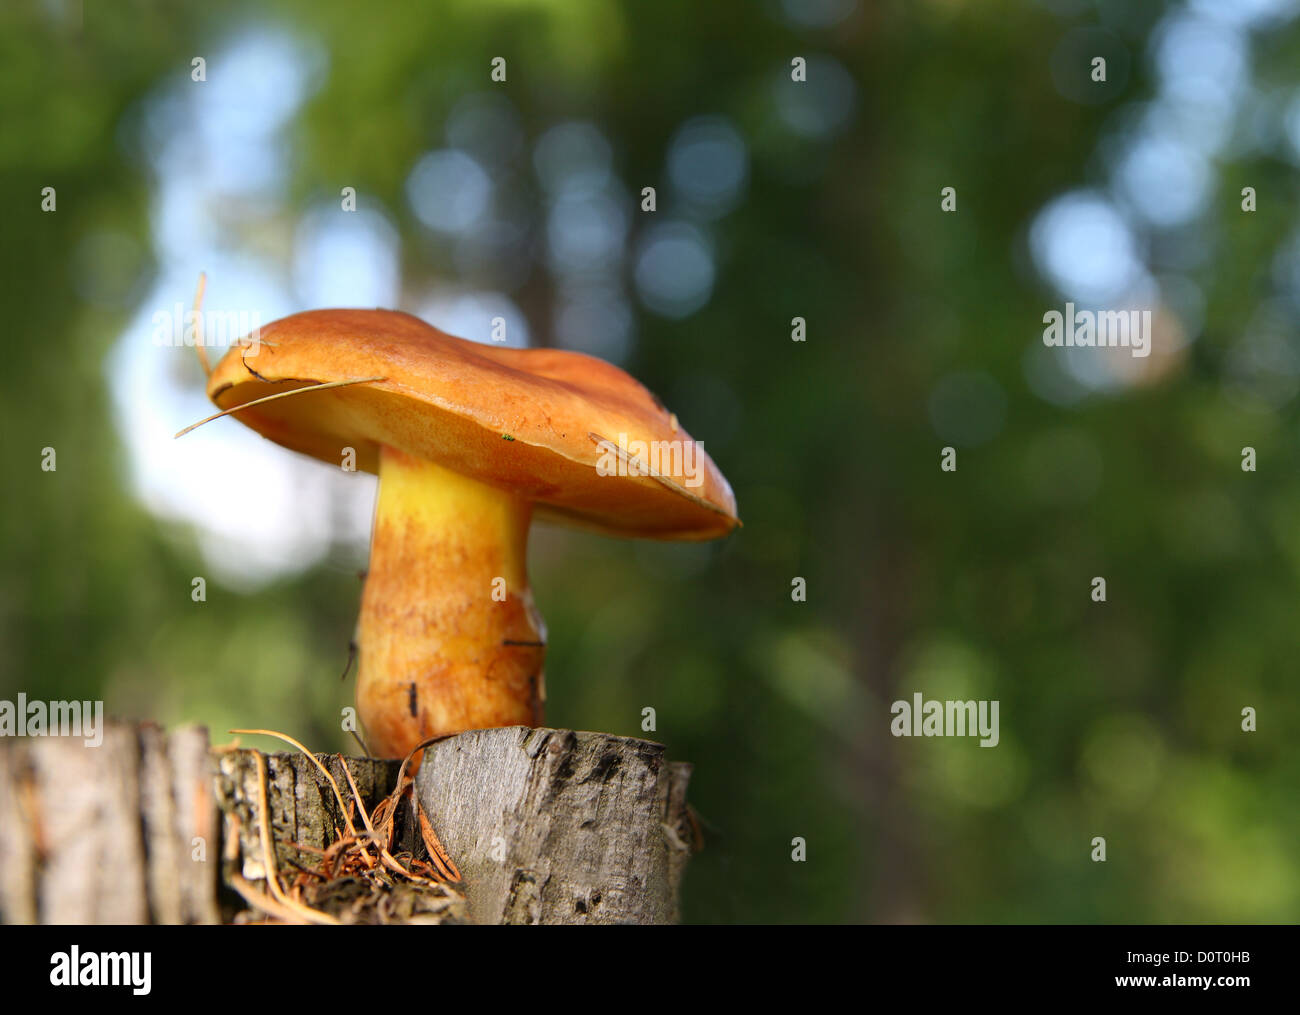 mushroom on stump in forest Stock Photo